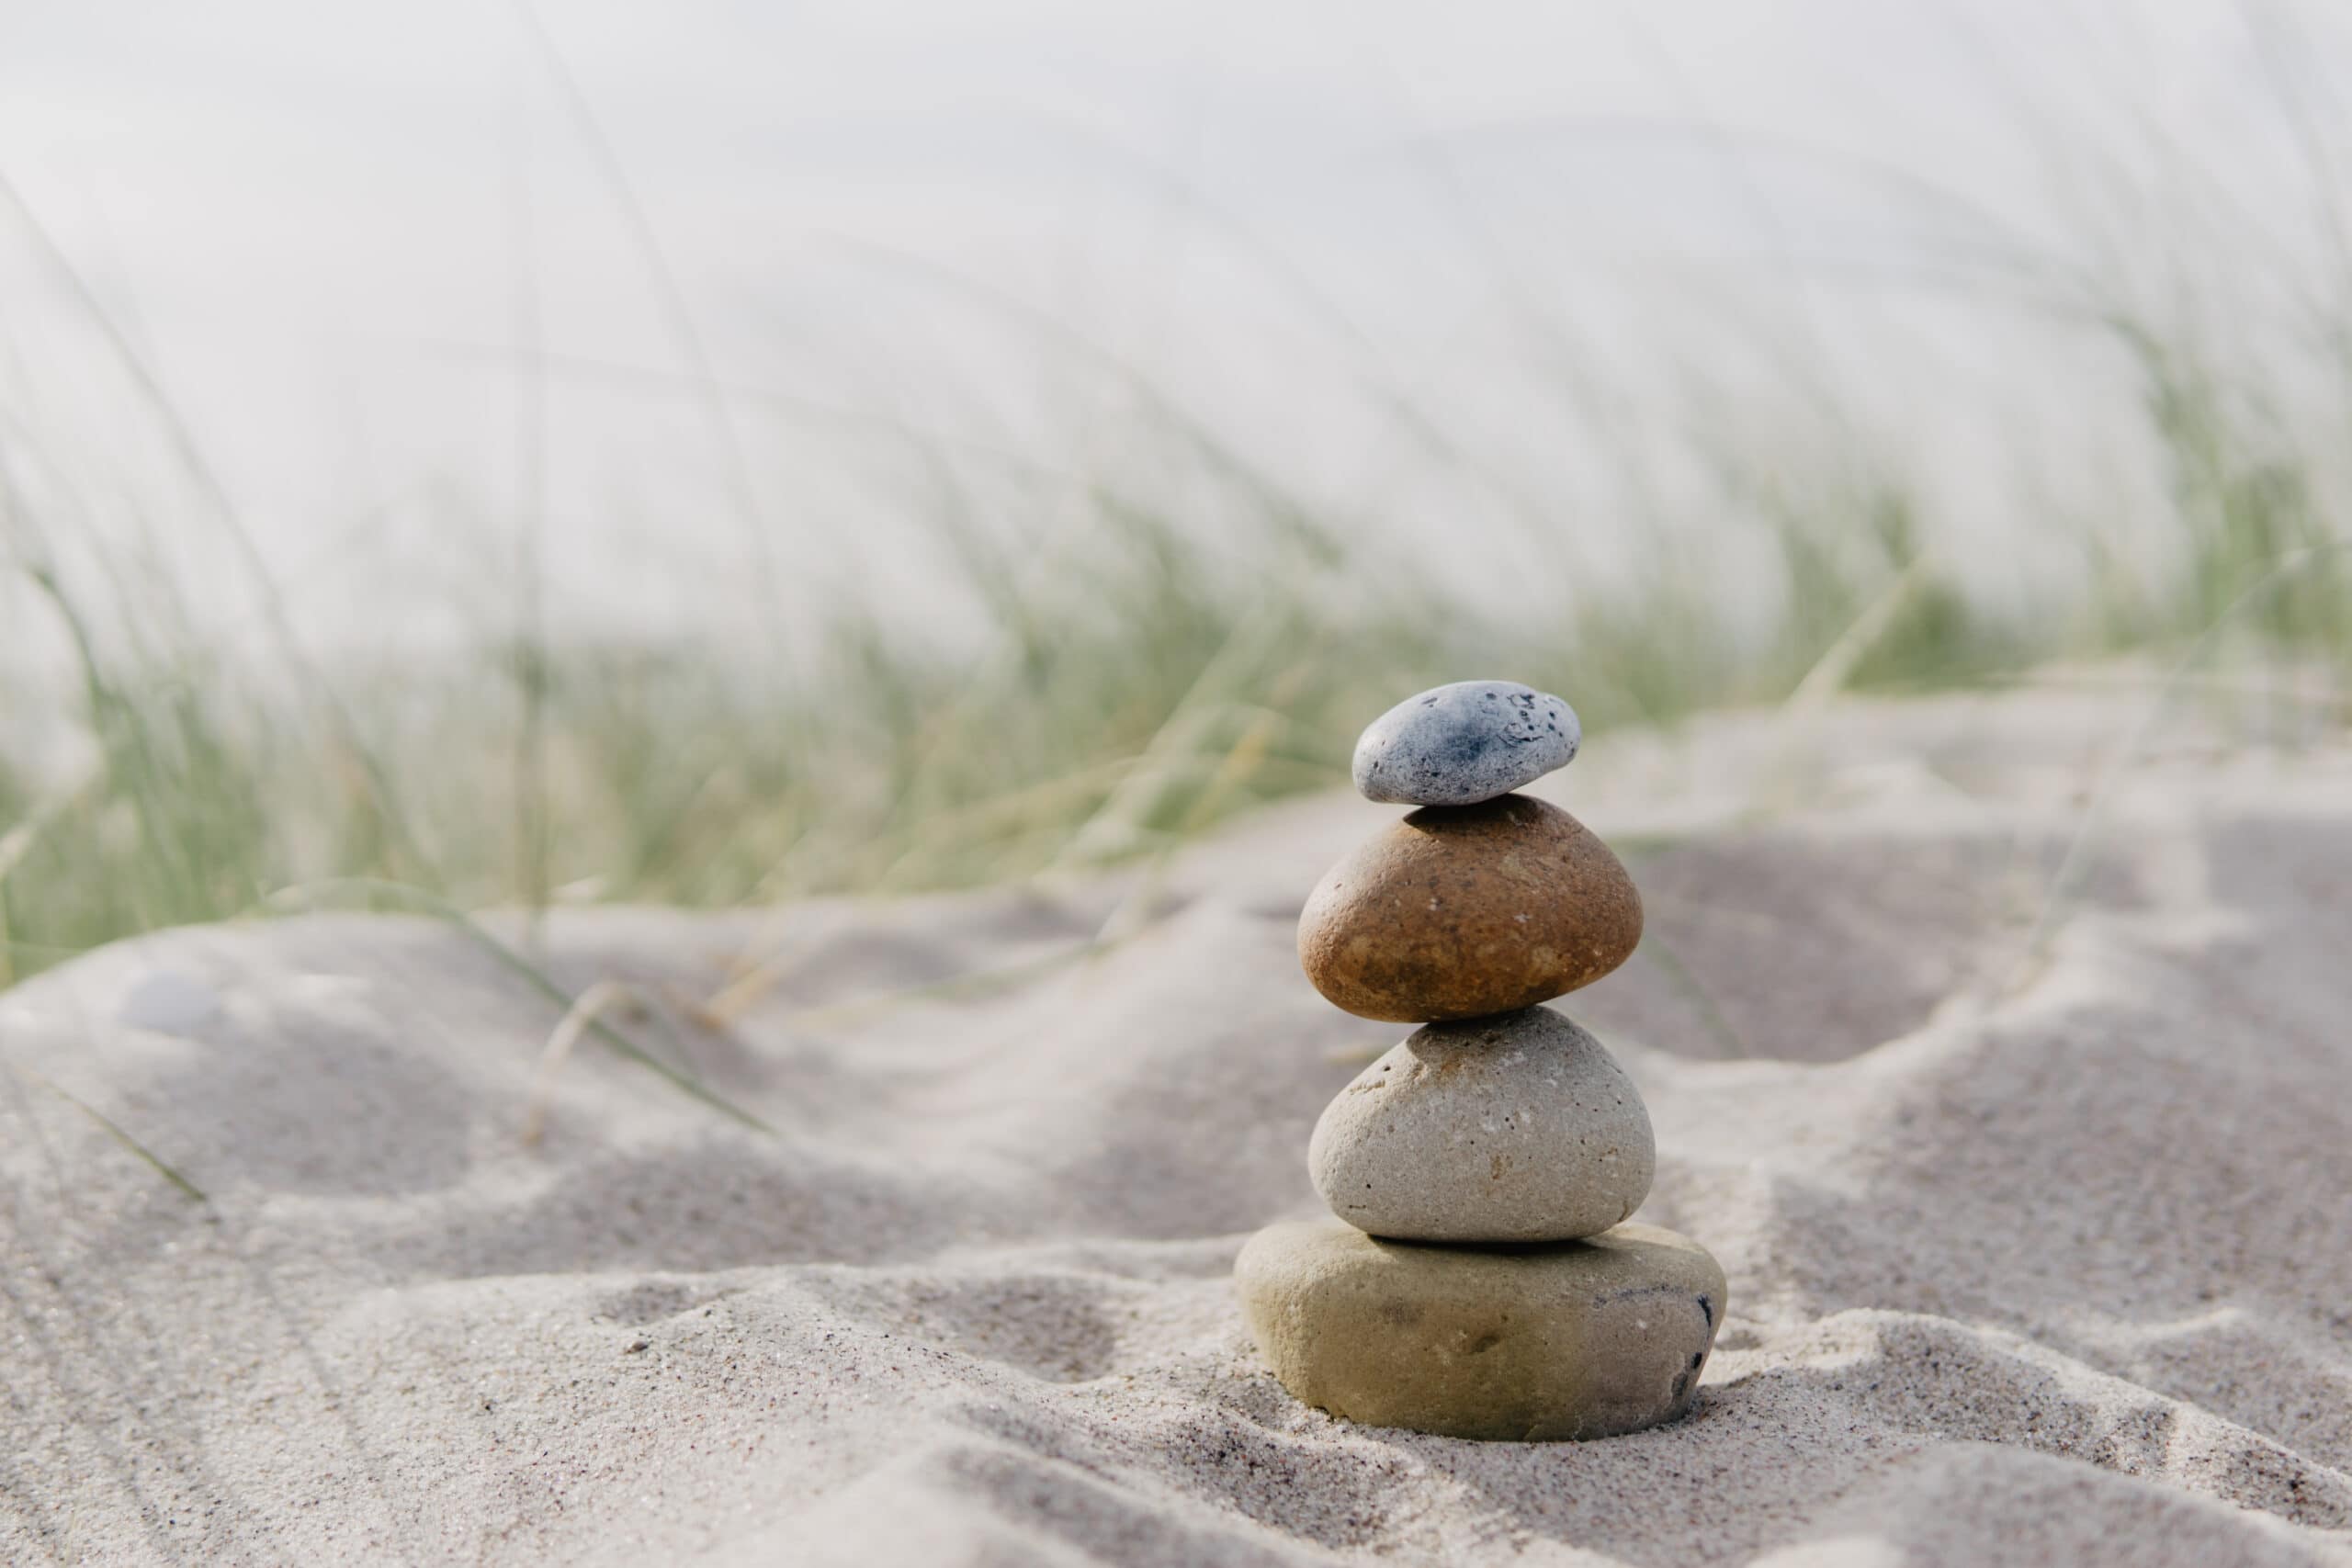 stone cairns at the beach, baltic sea